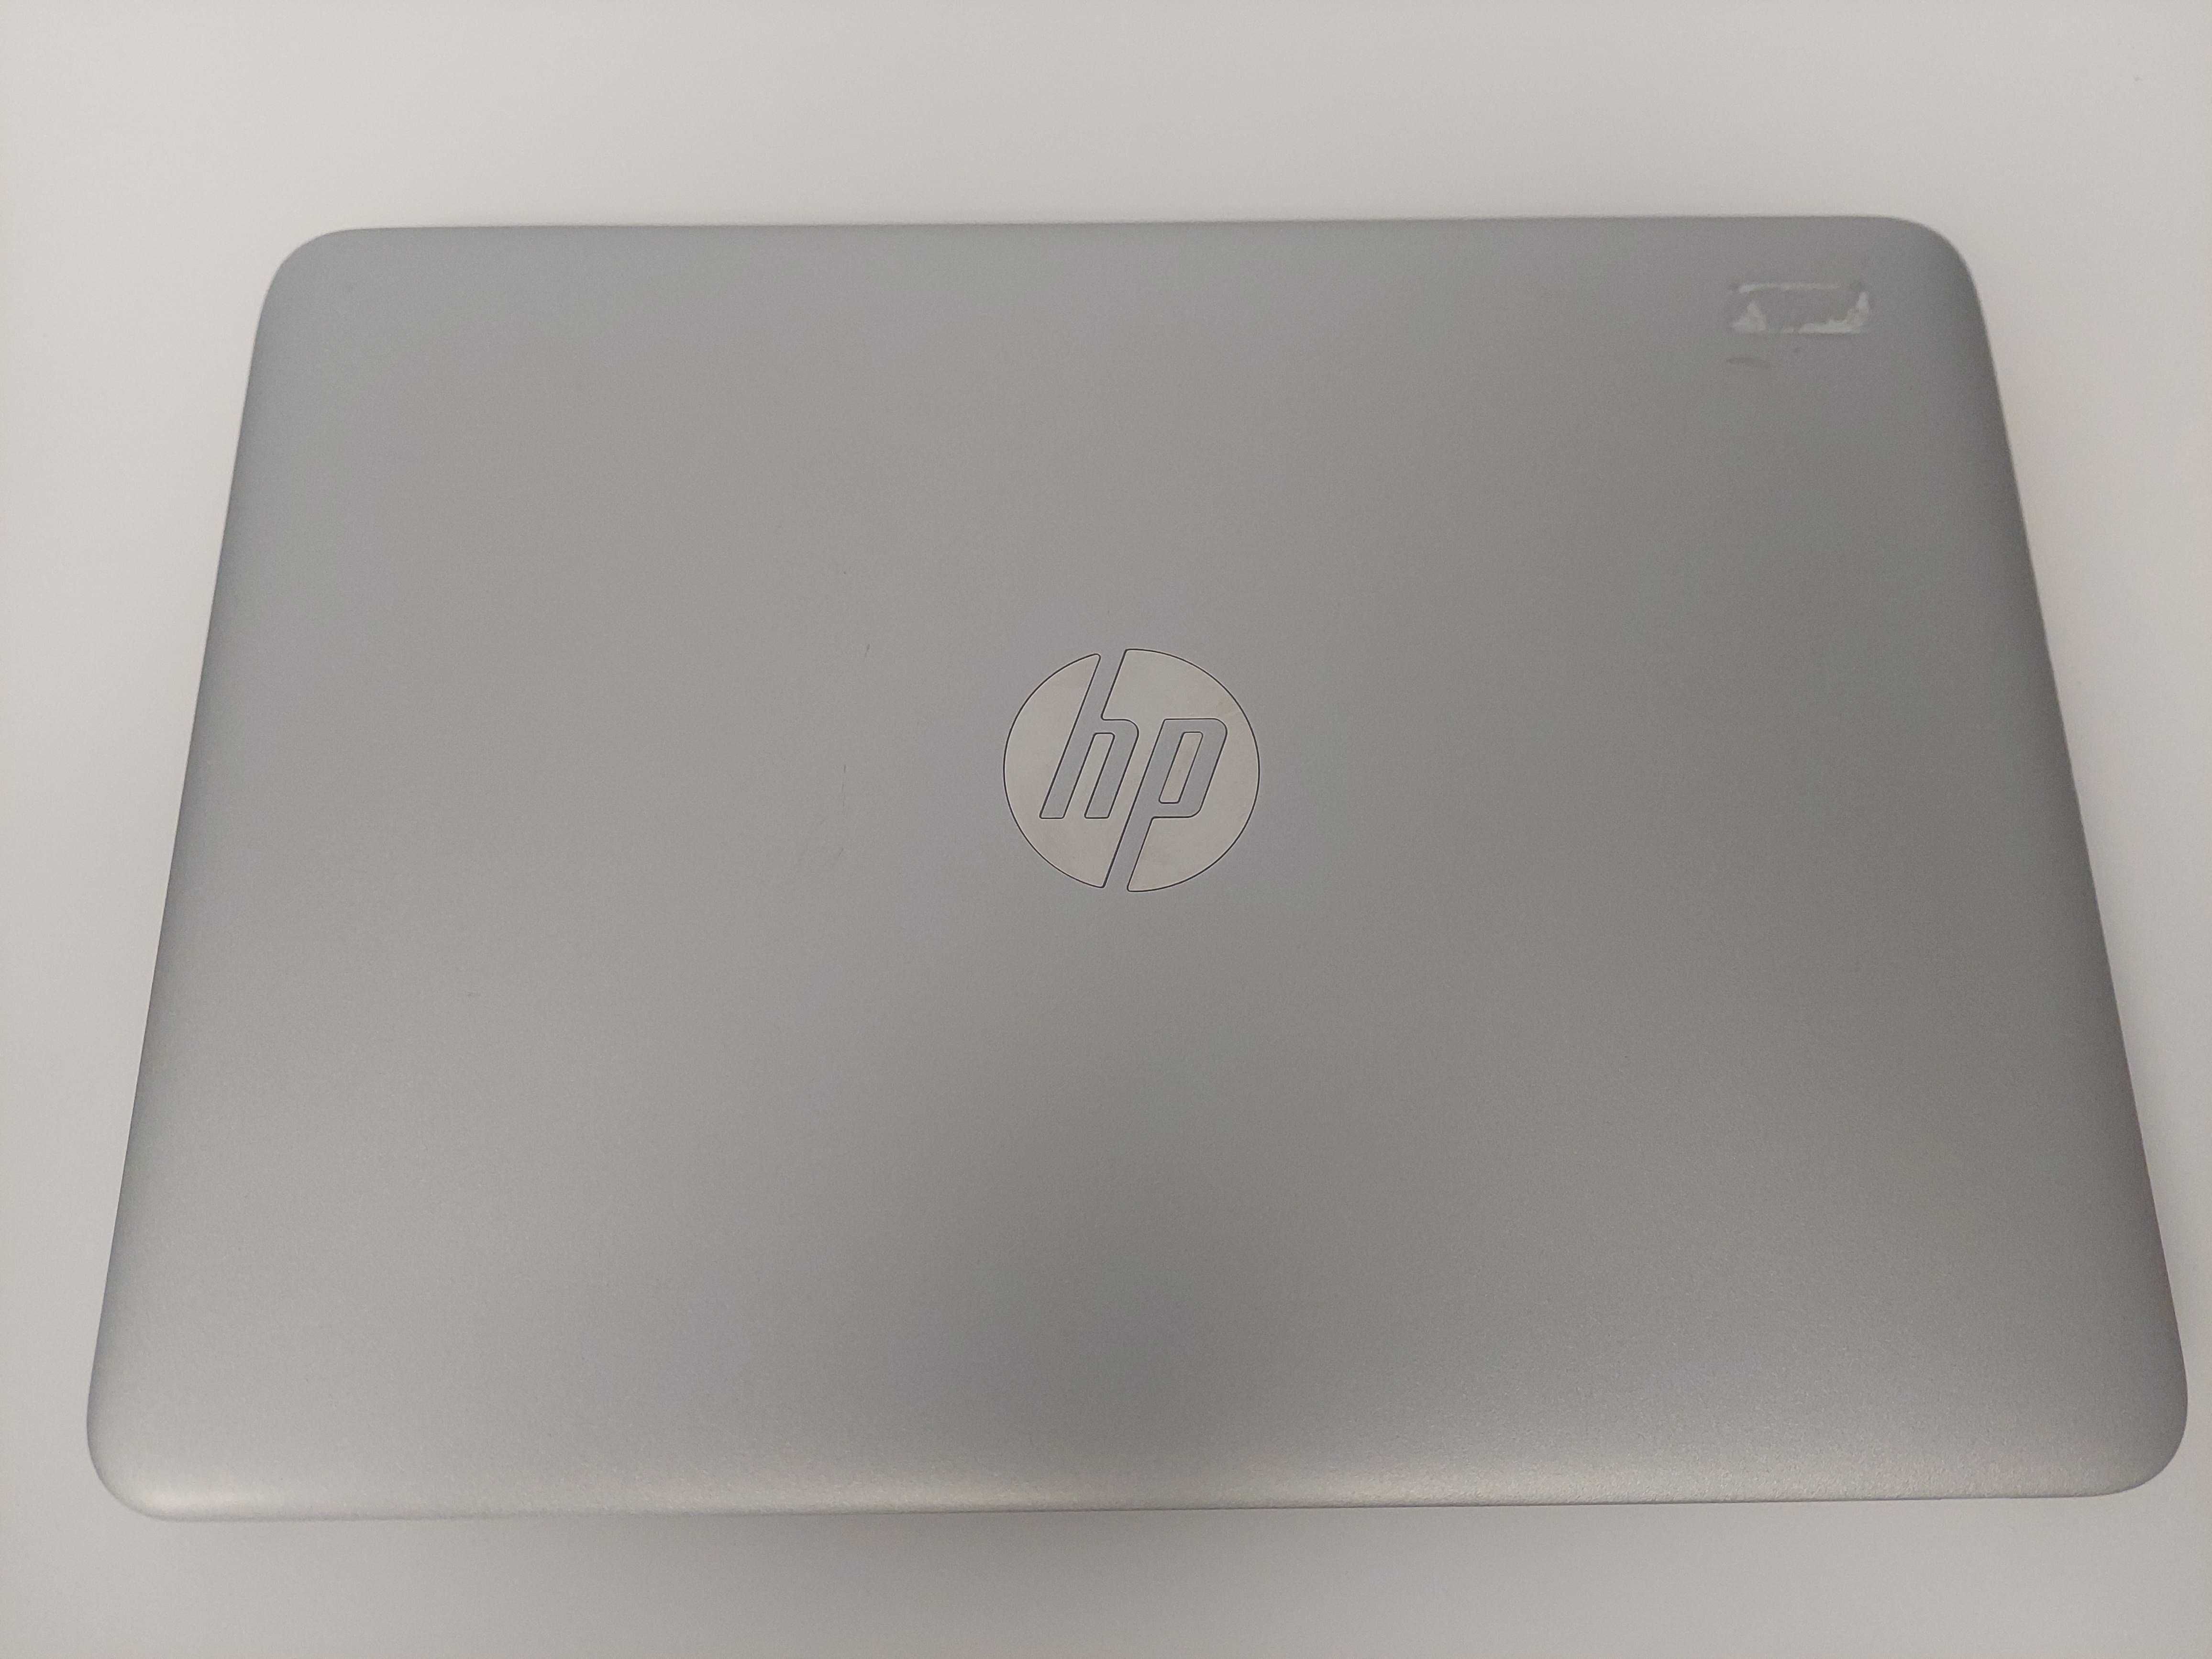 Laptop HP EliteBook 725 G3 A10-8700B/8GB/128SSD